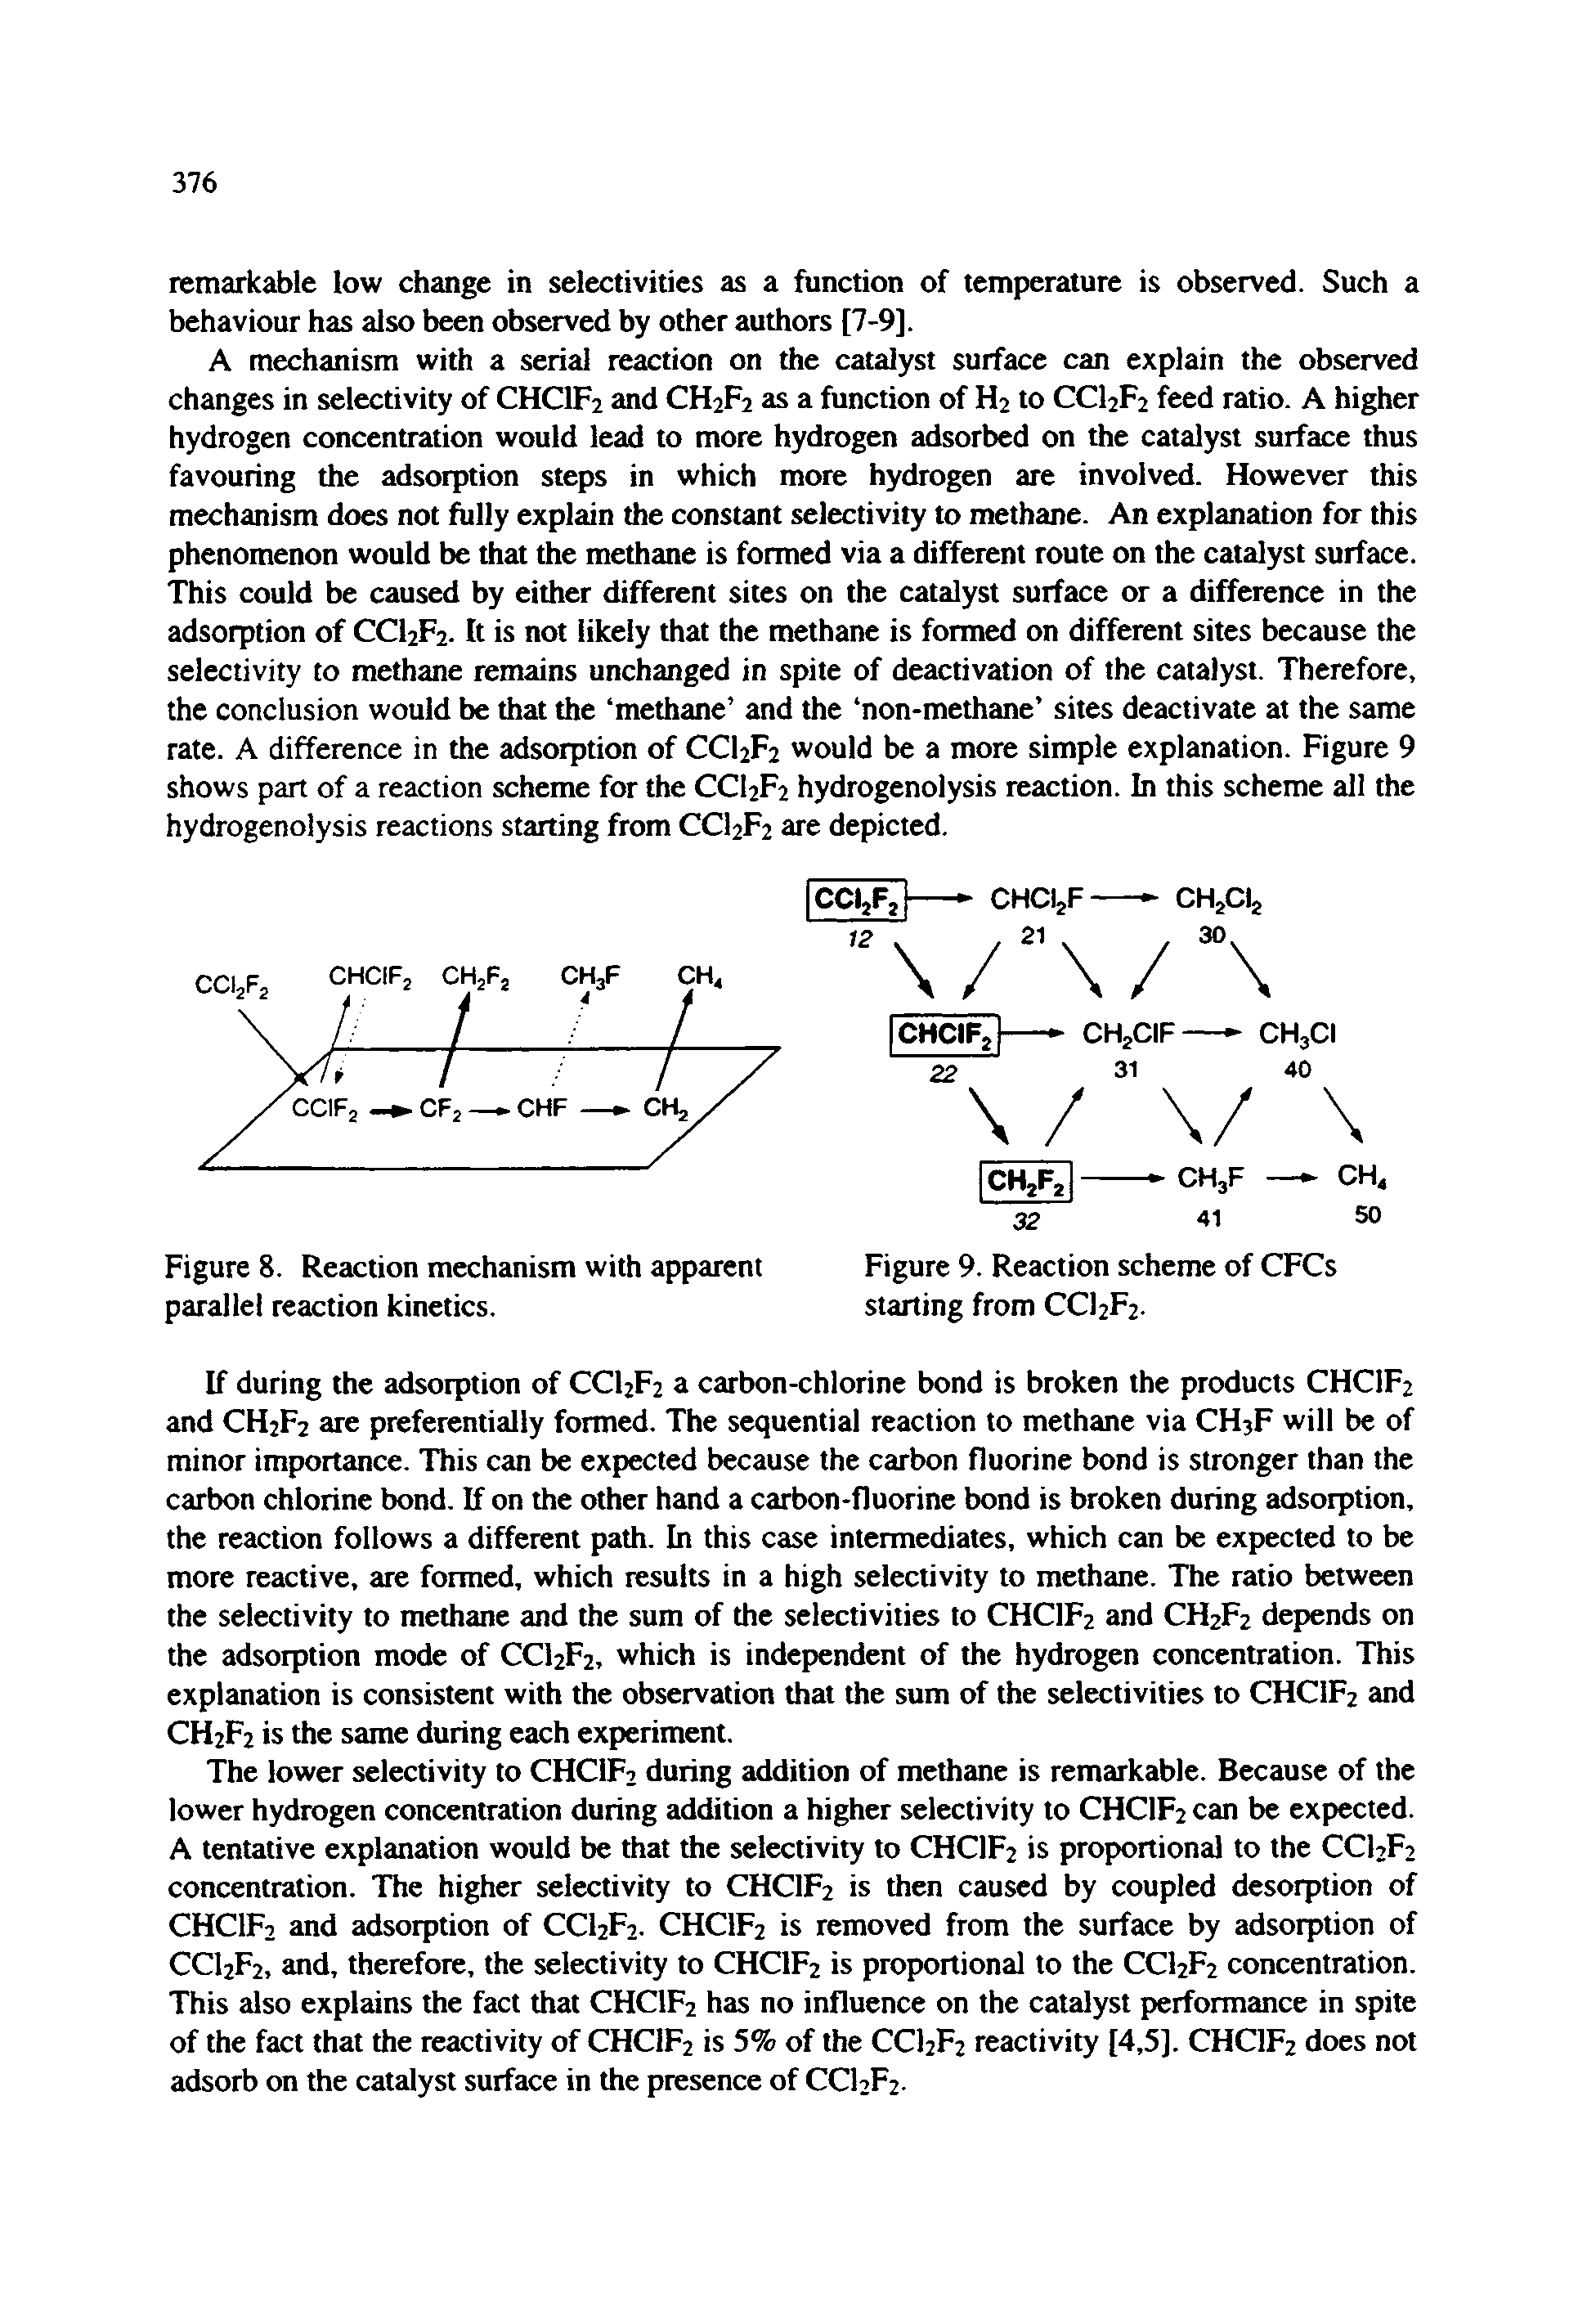 Figure 8. Reaction mechanism with apparent parallel reaction kinetics.